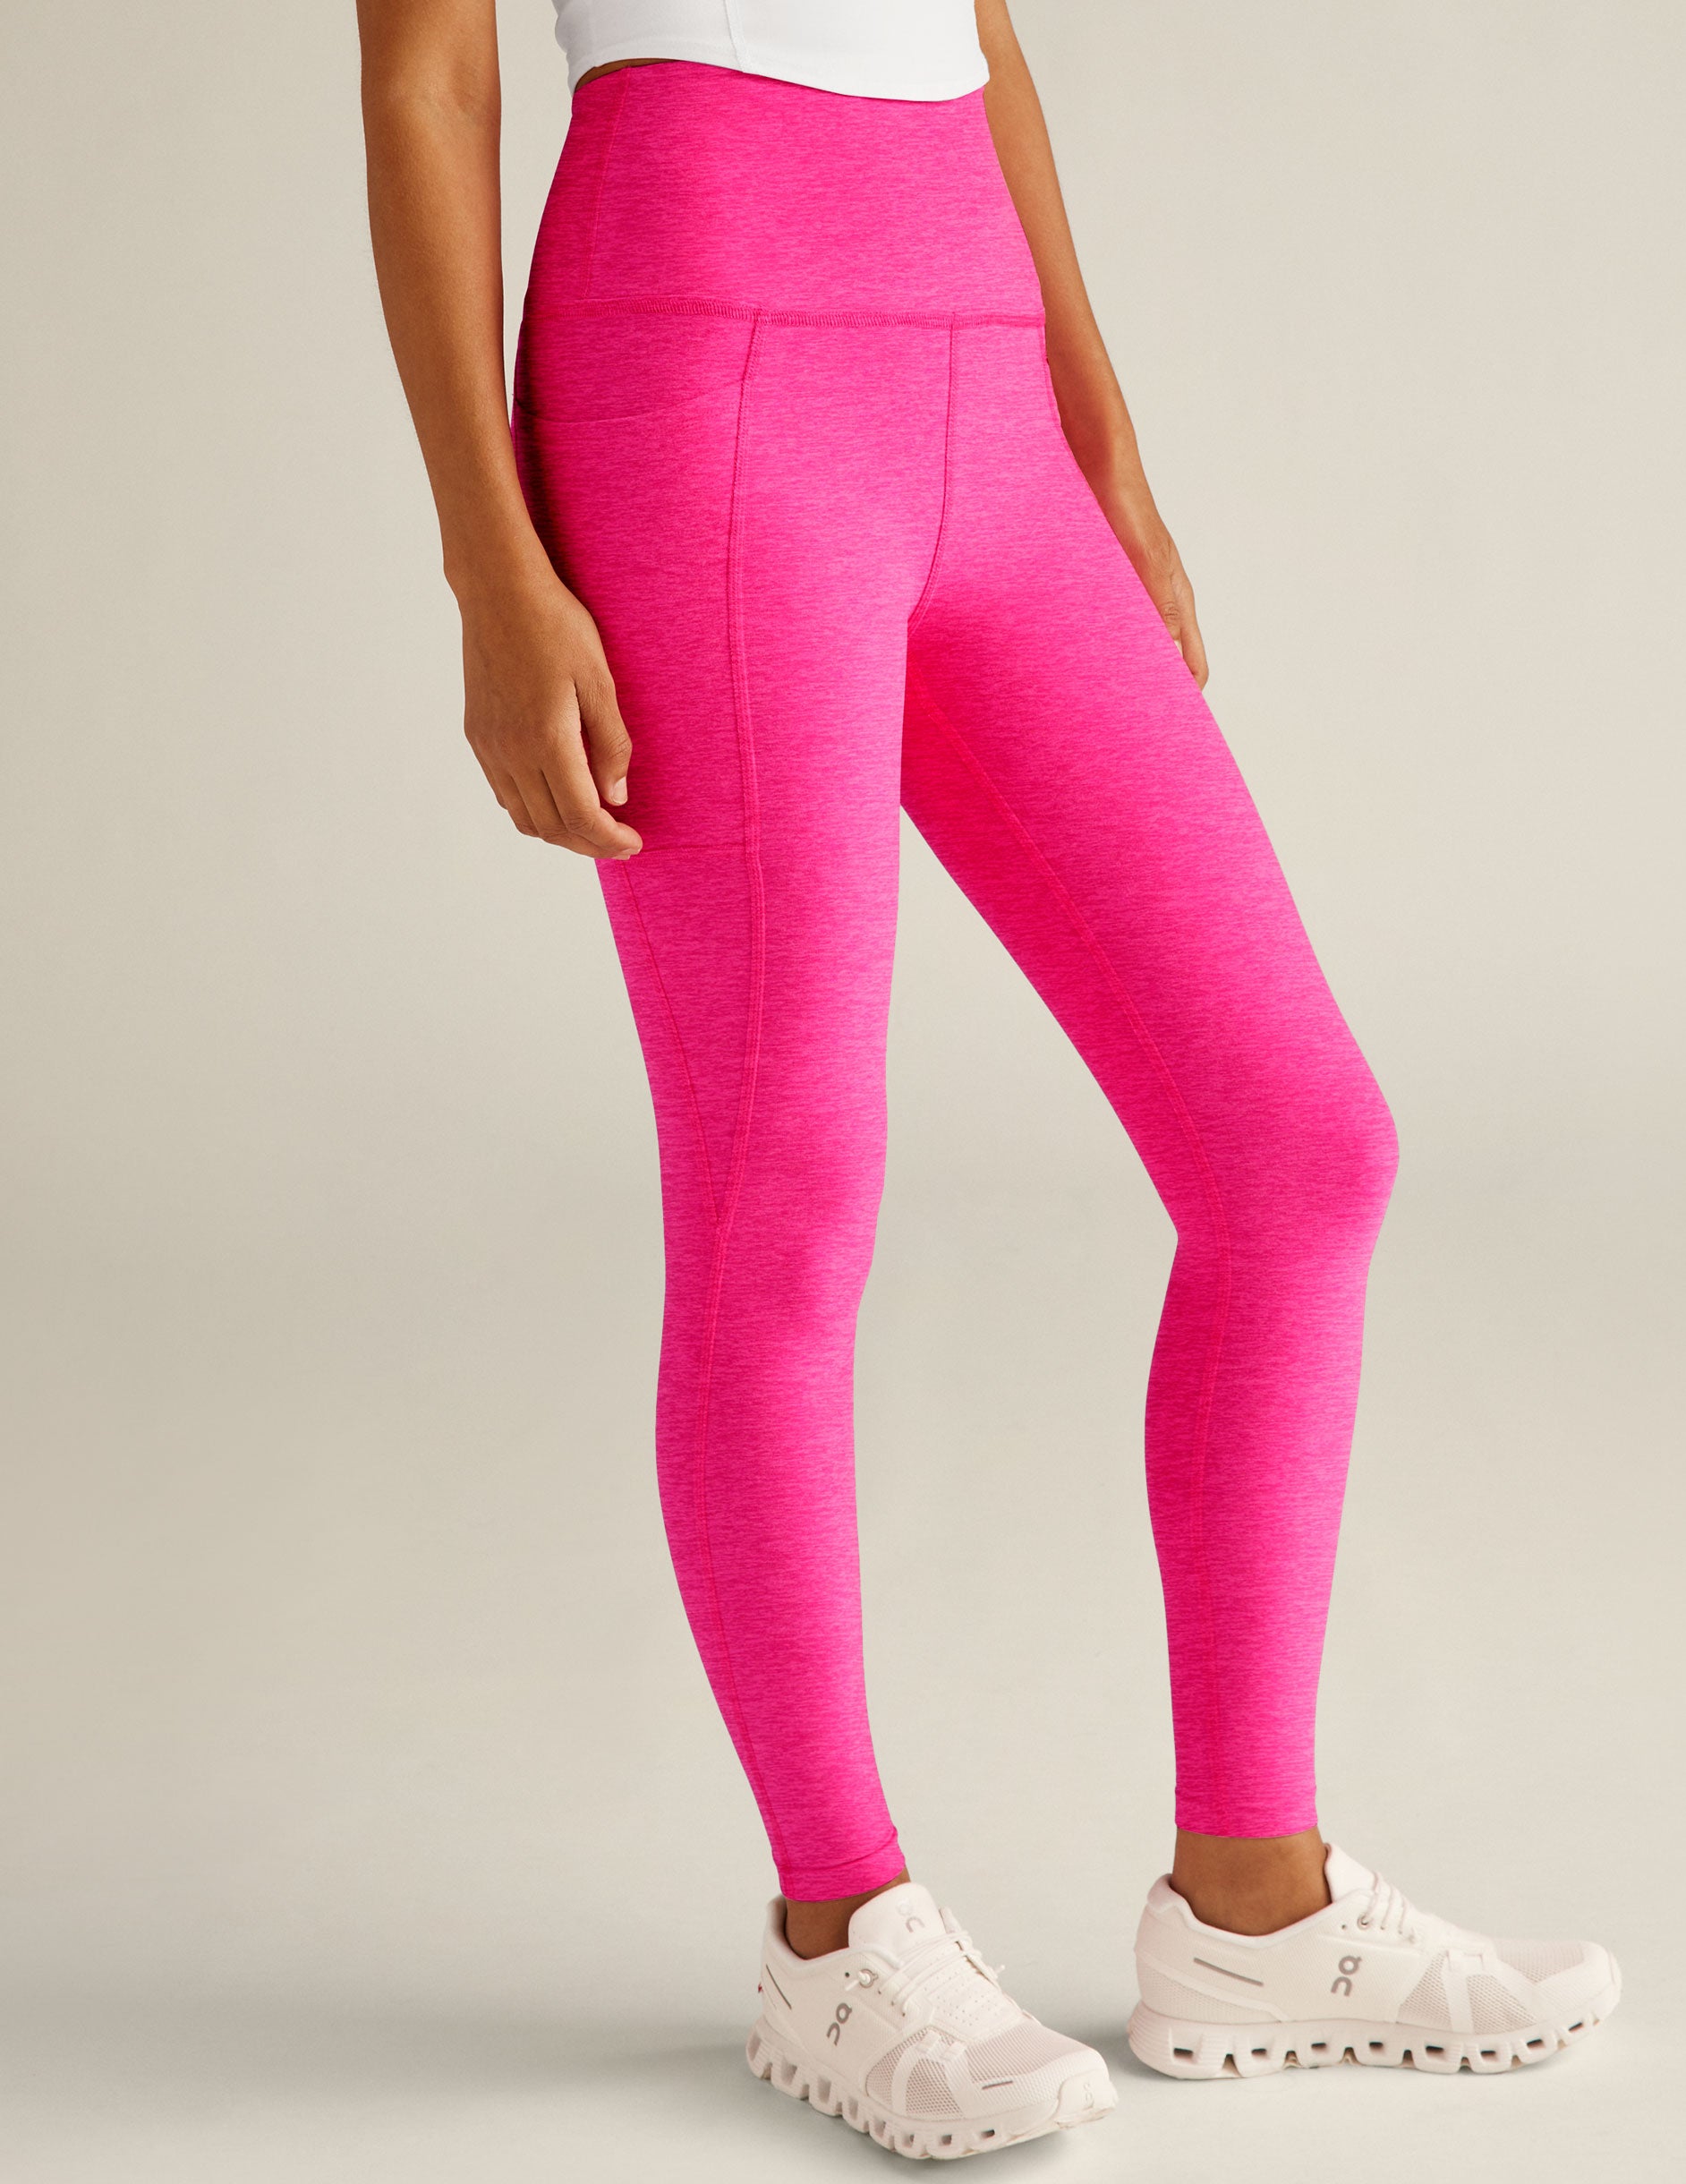 Generic Women See Through Hot Yoga Pants Shorts Transparent Pink_S